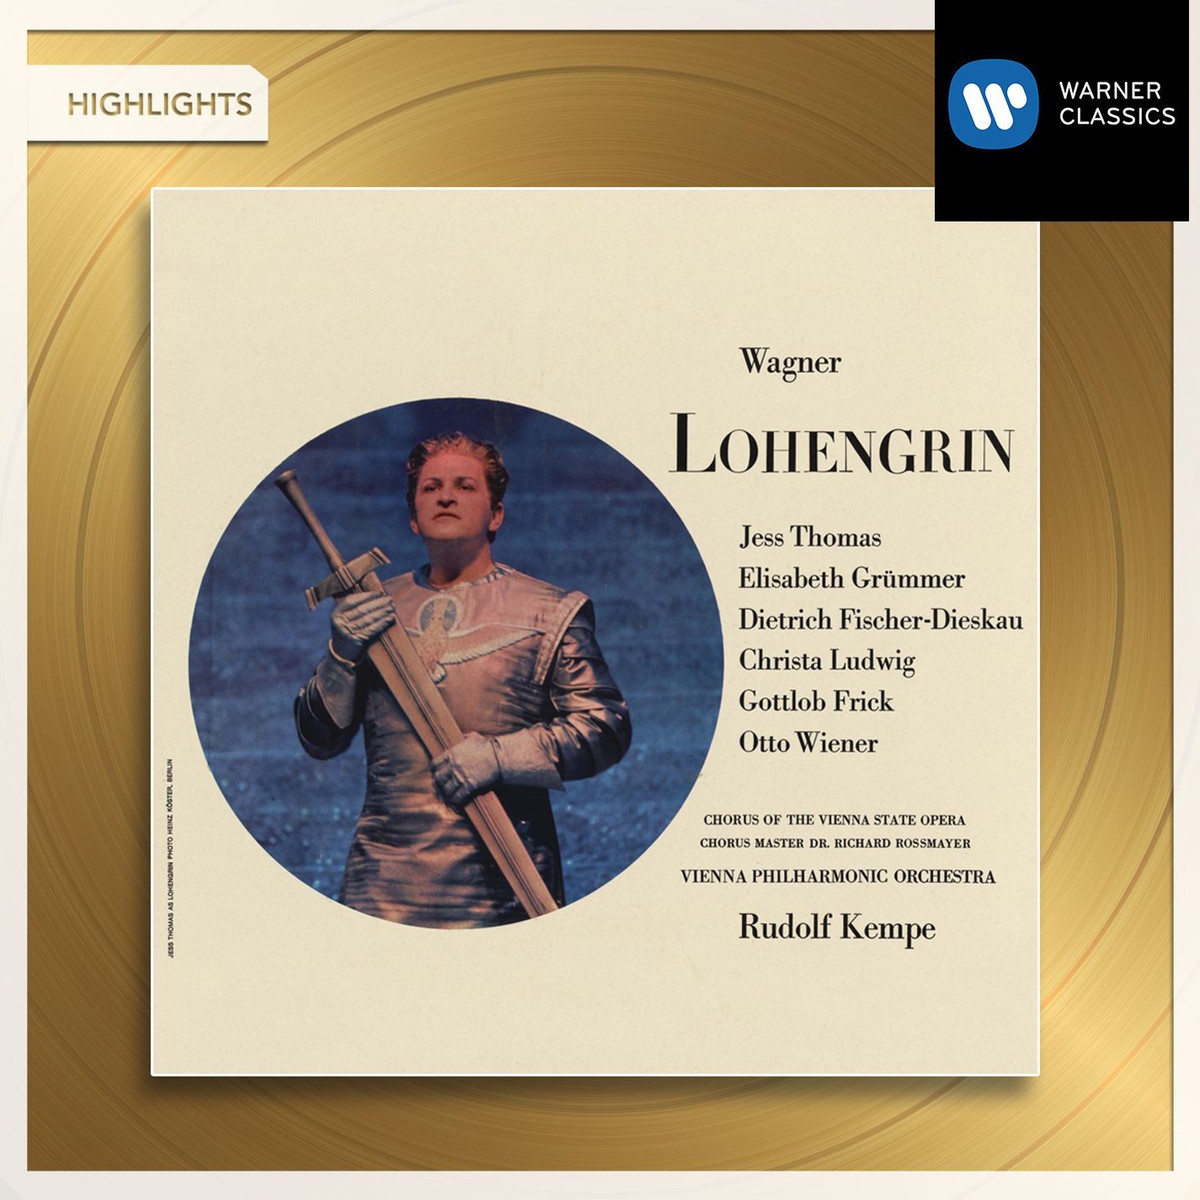 Lohengrin (2000 Digital Remaster): In deiner Hand, in deiner Treu' (Lohengrin/Elsa/Chor)